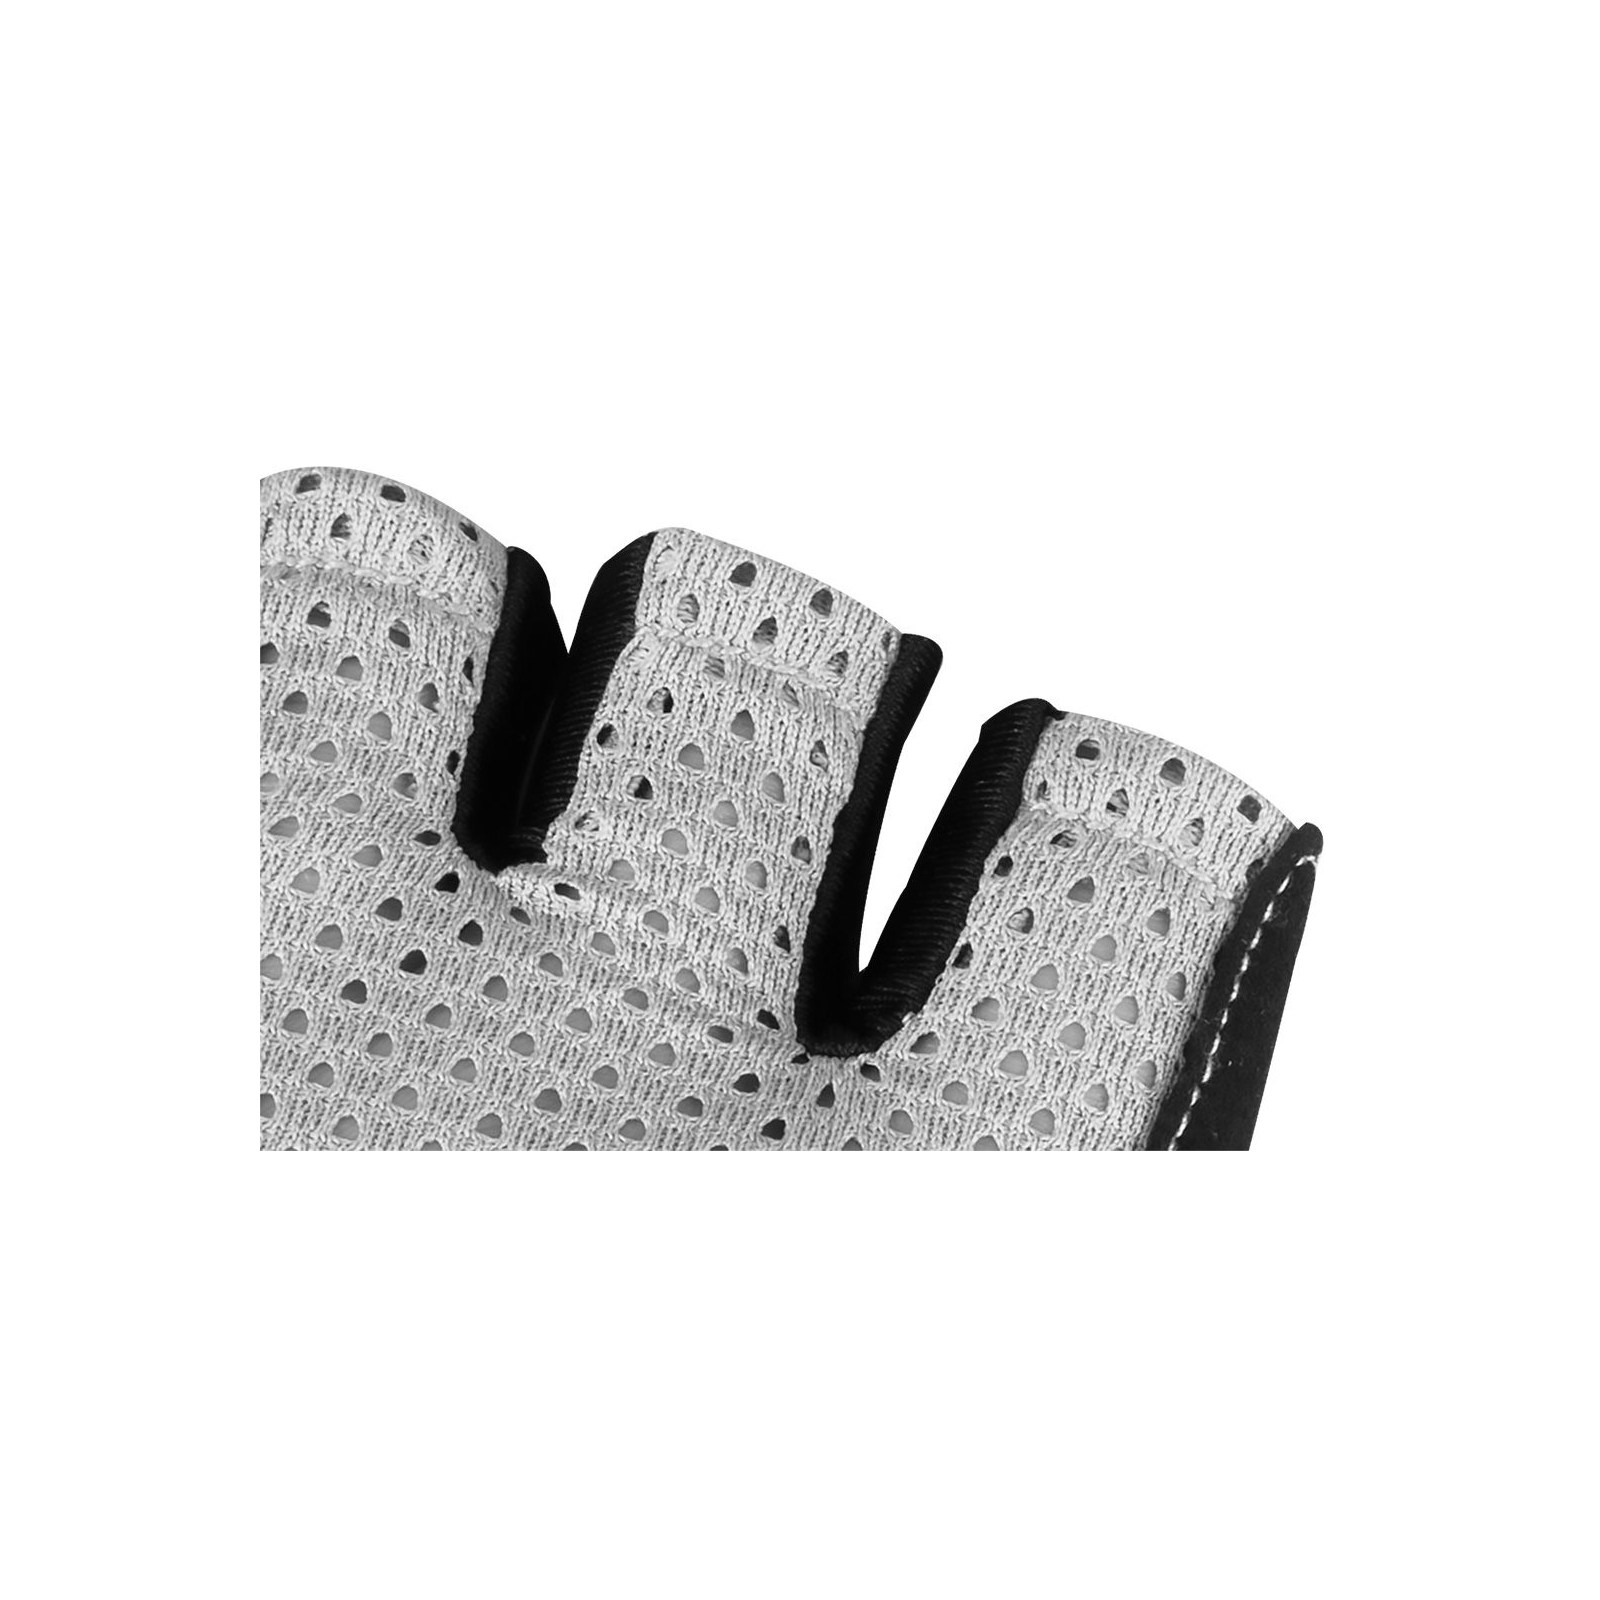 Велоперчатки Neo Tools White XL (91-016-XL) изображение 11